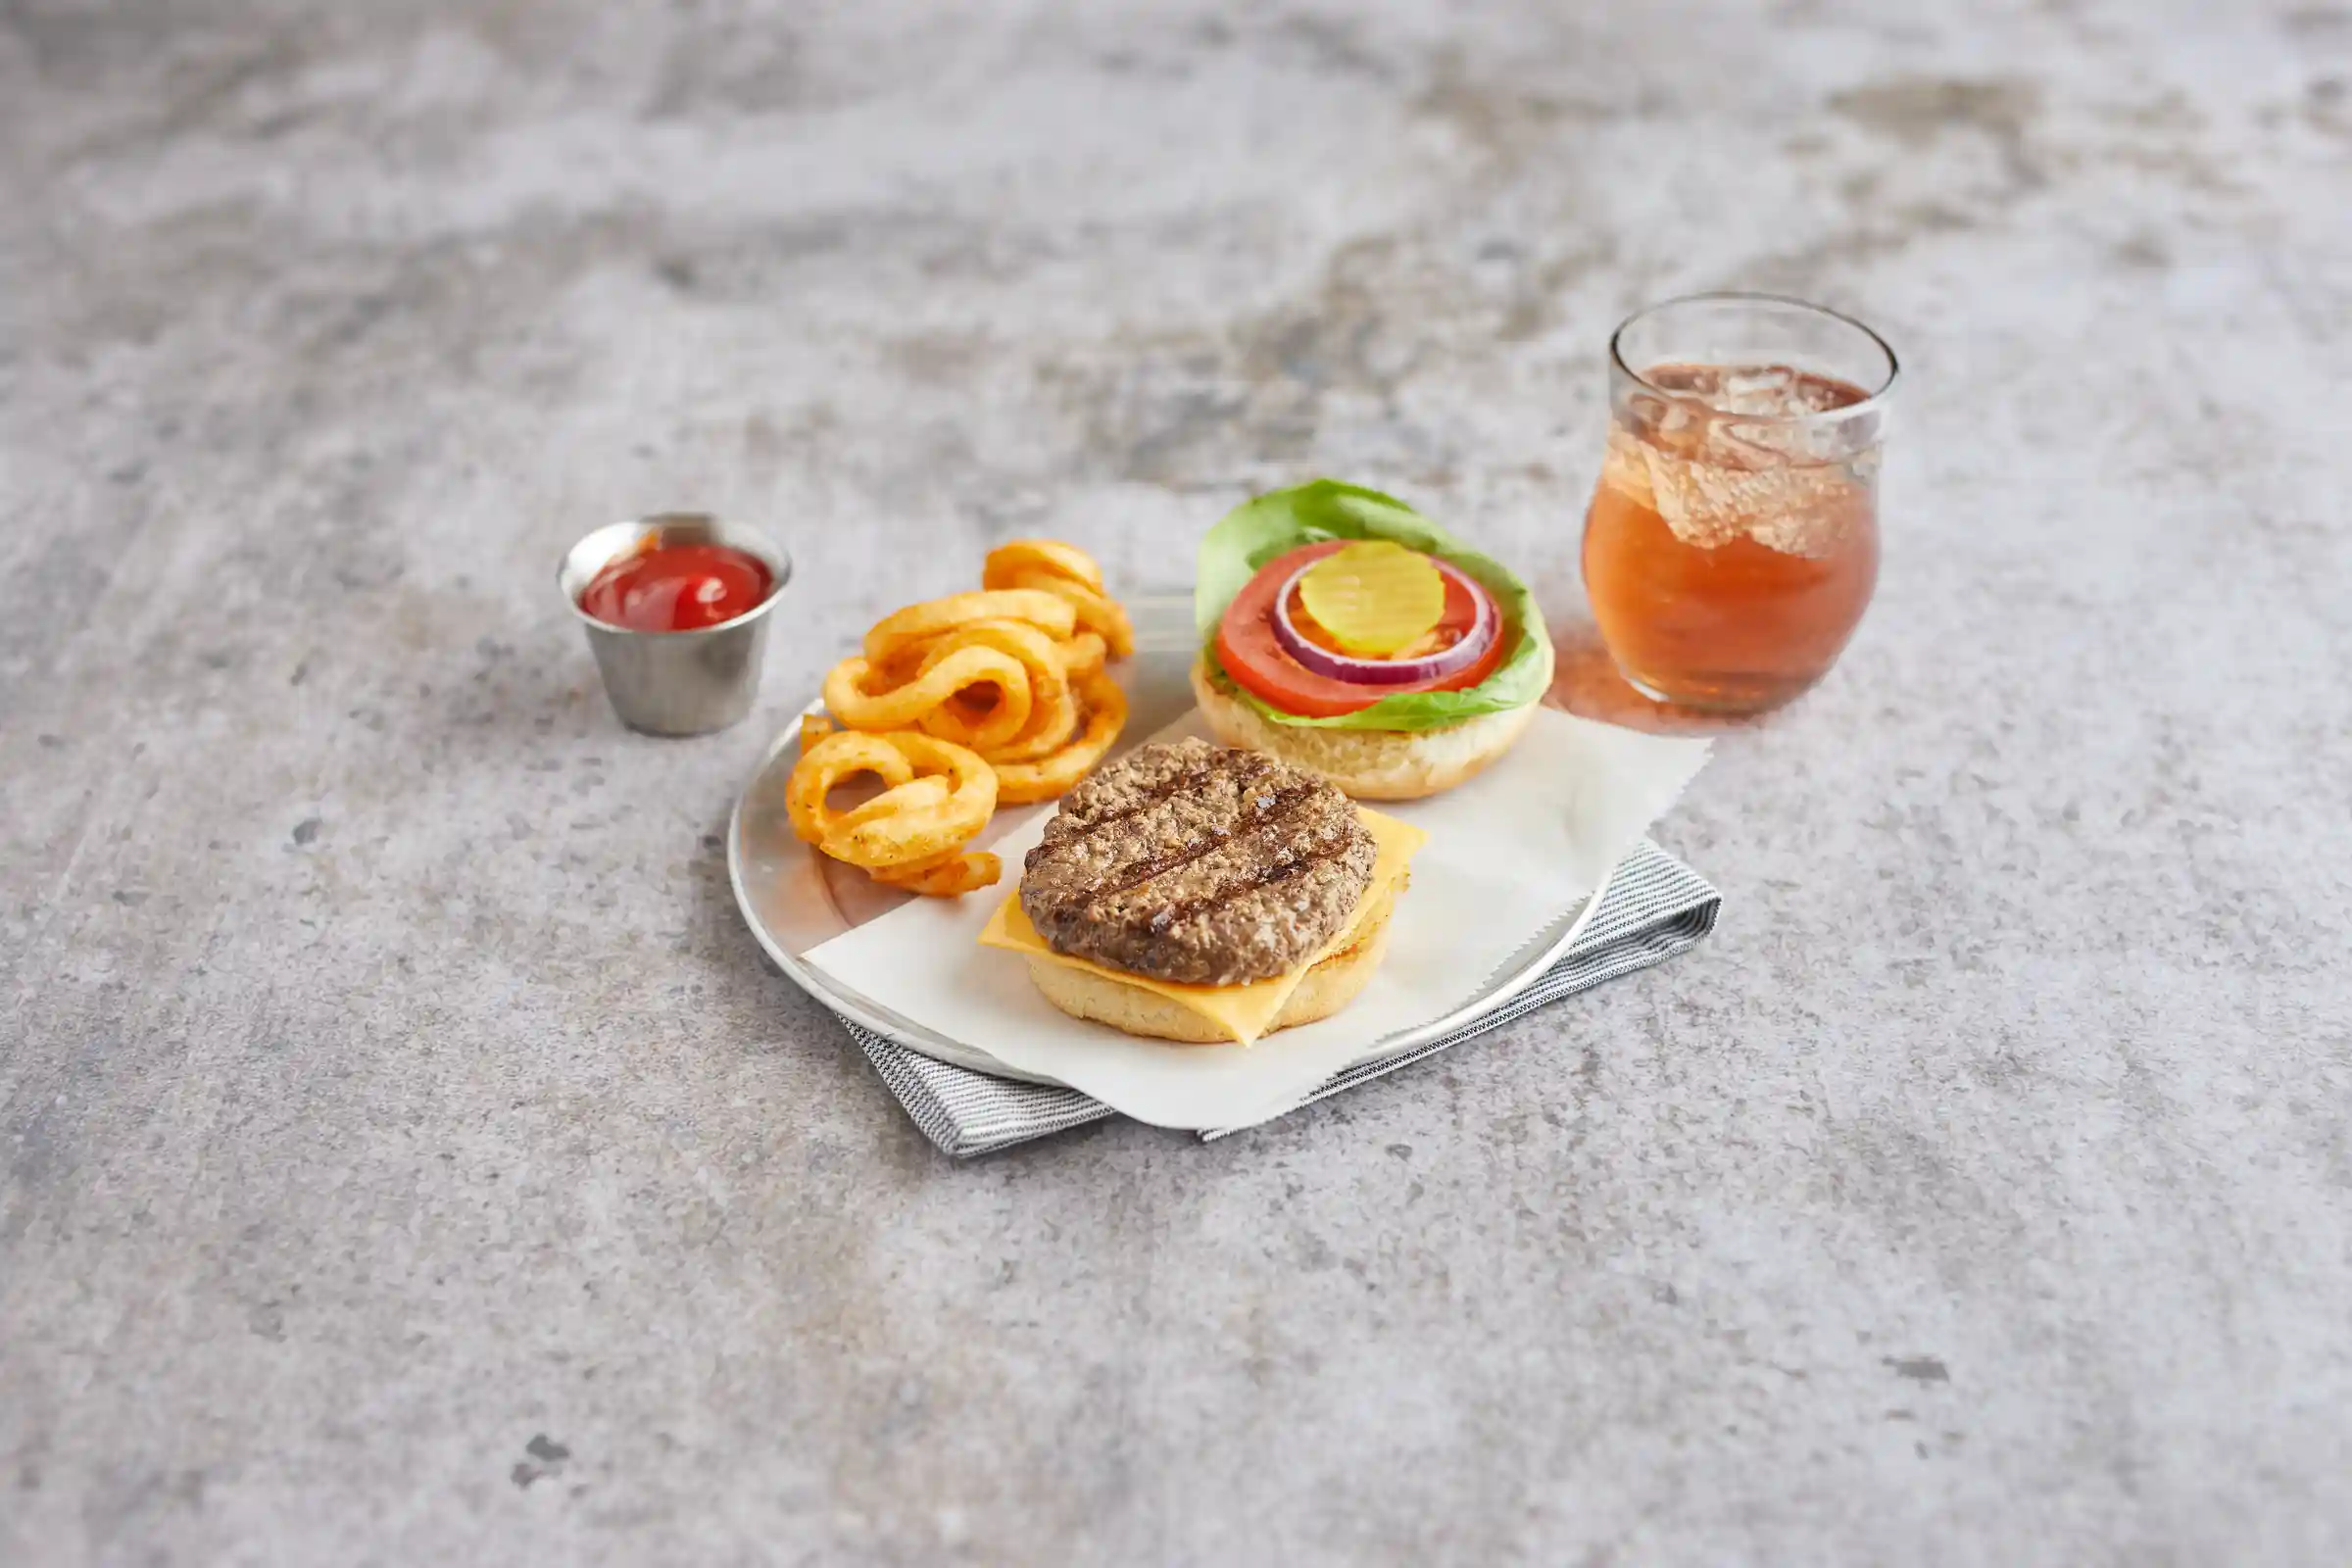 AdvancePierre™ Beef Burger, 2.0 oz.https://images.salsify.com/image/upload/s--sOhYveI---/q_25/gylpm47wfzme8fll8ny8.webp